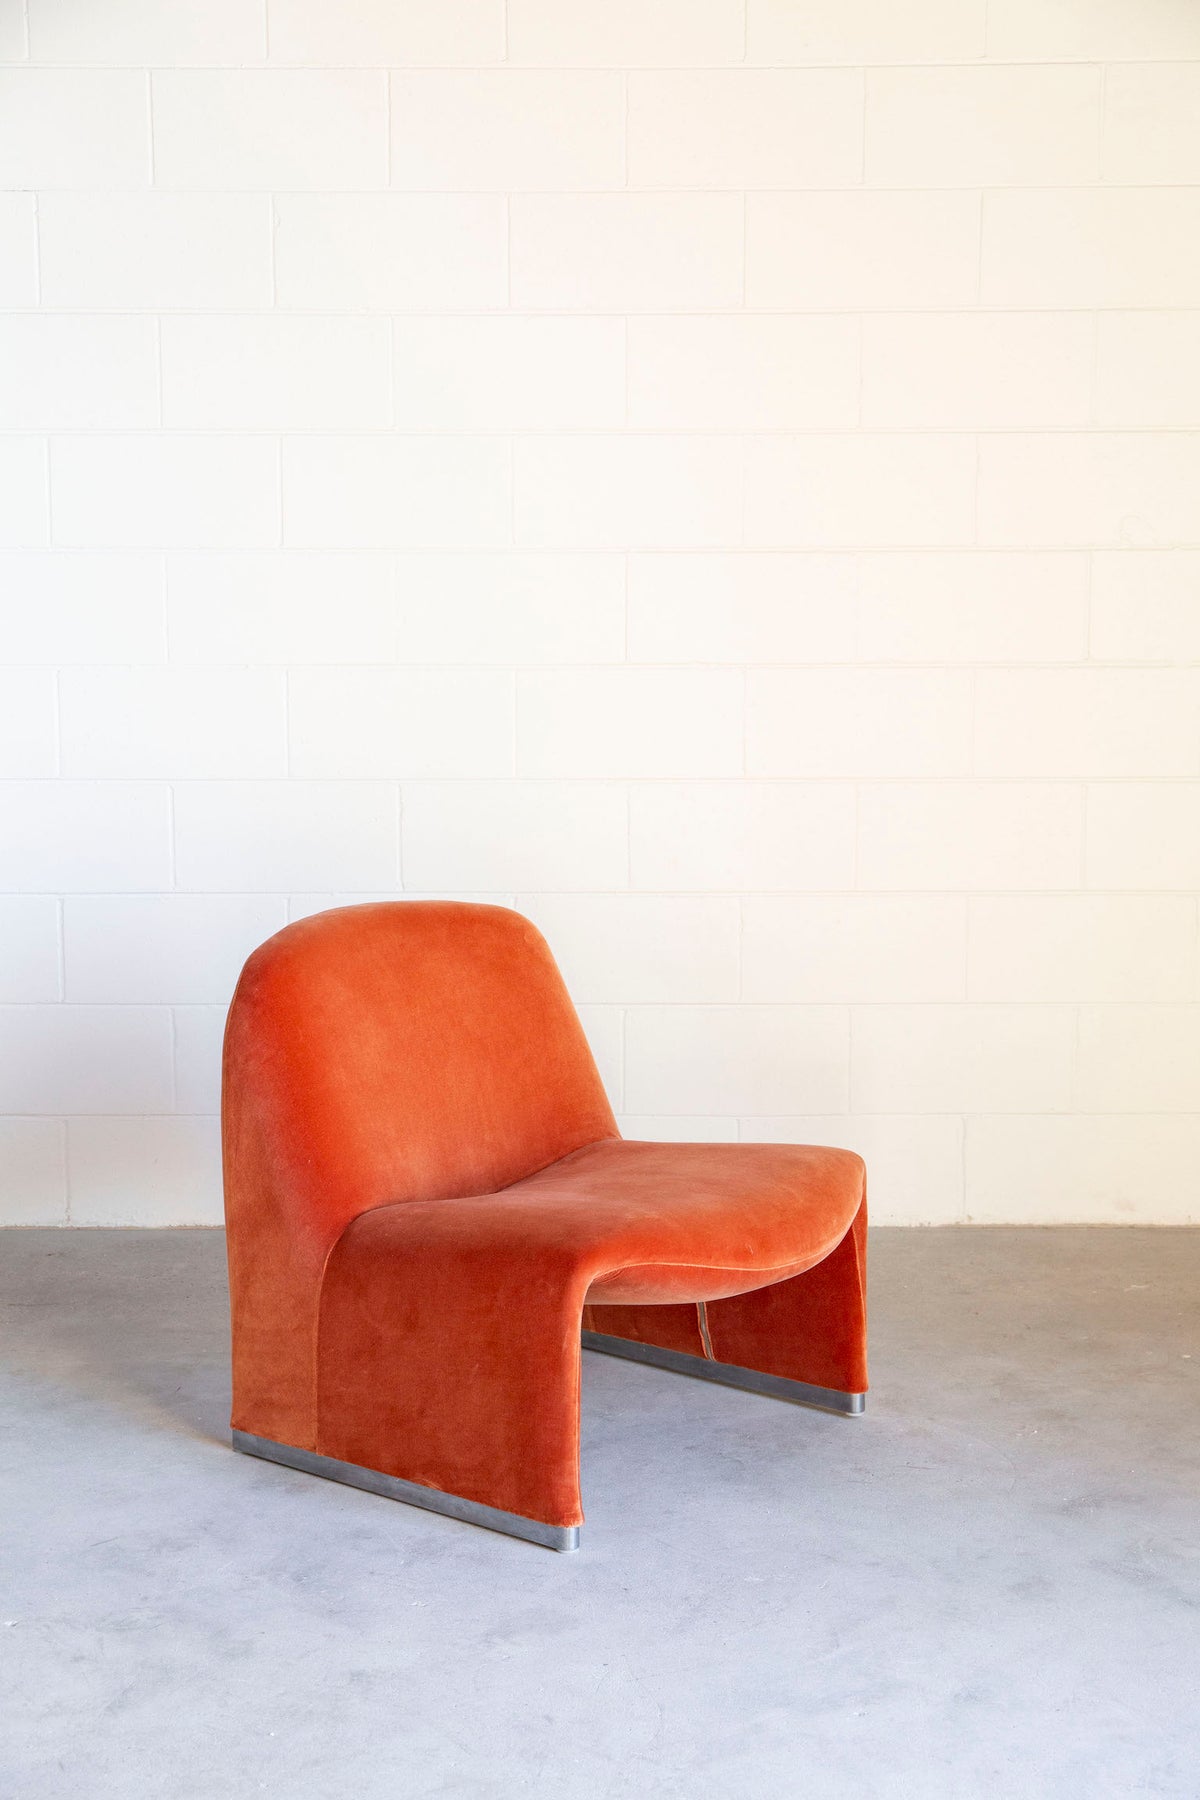 Vintage Artifort Alky Chair - Terracotta